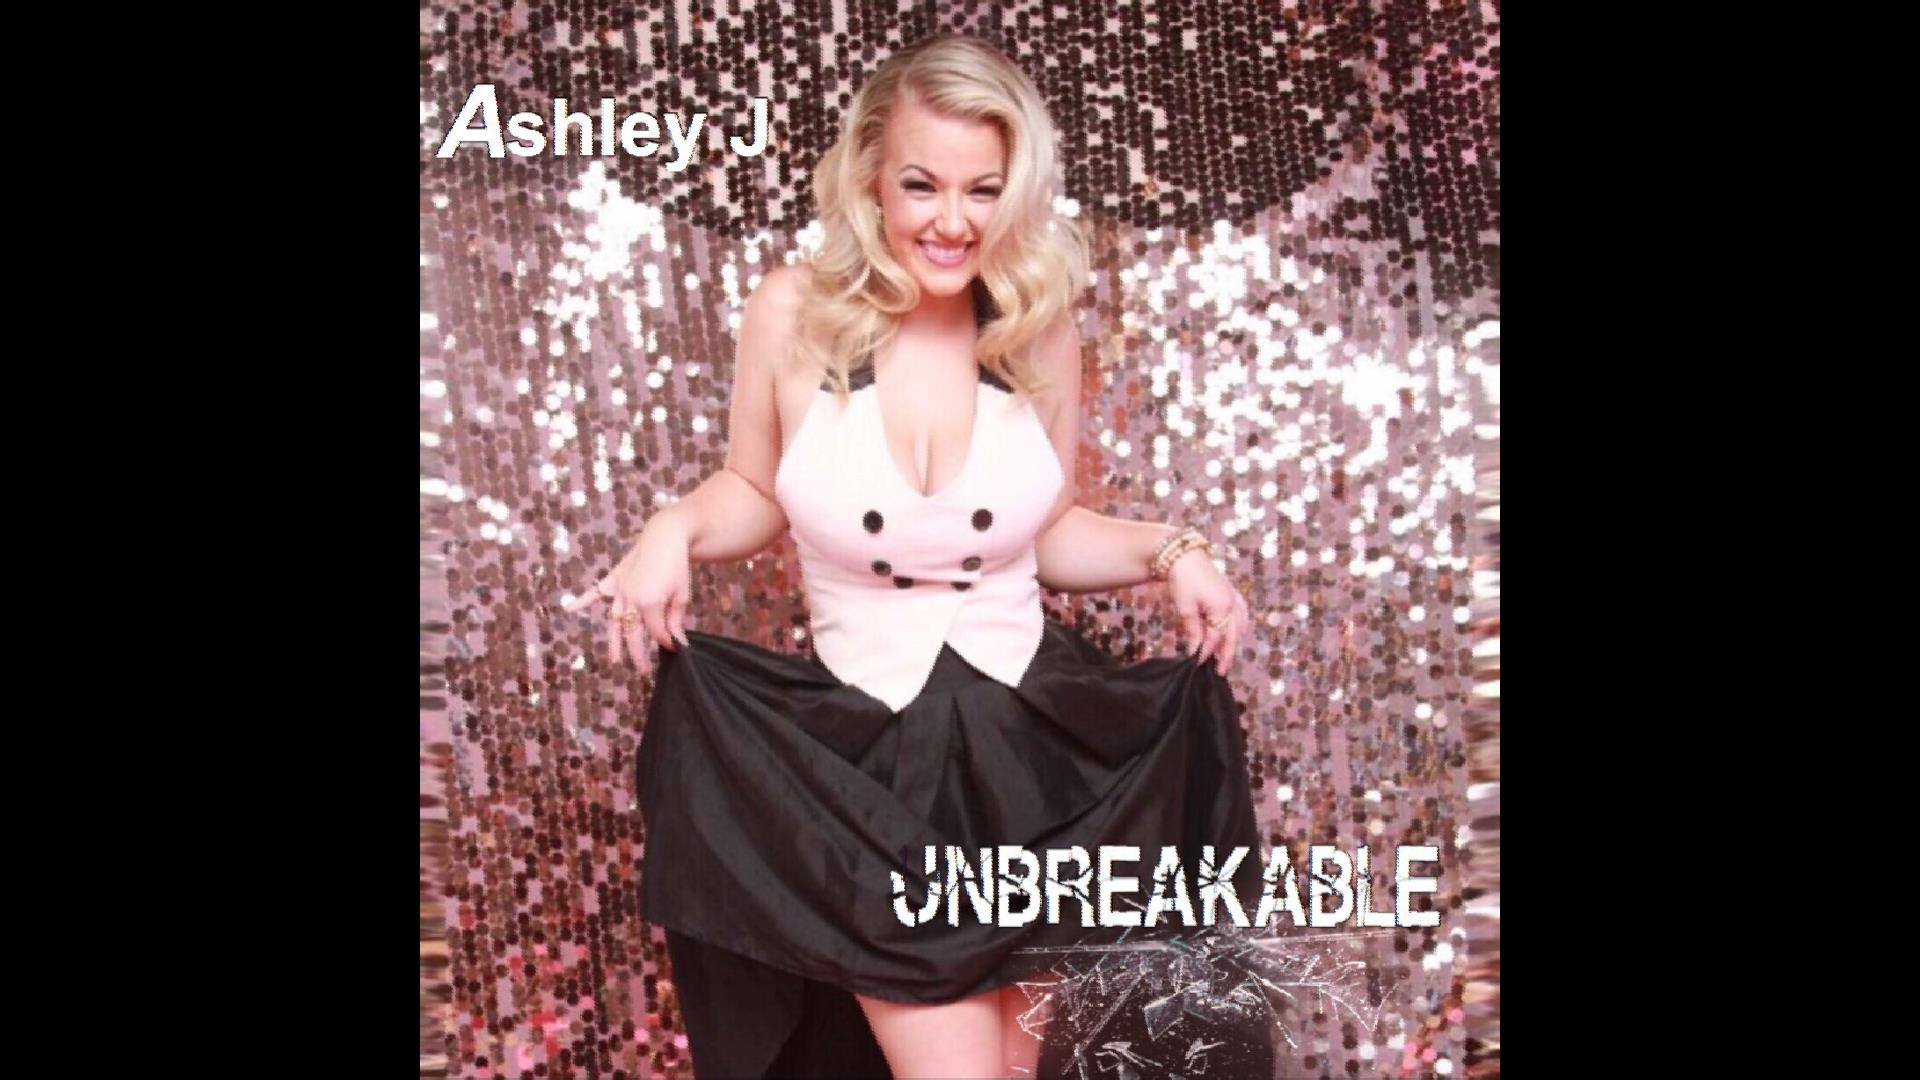  Ashley J – “Unbreakable”